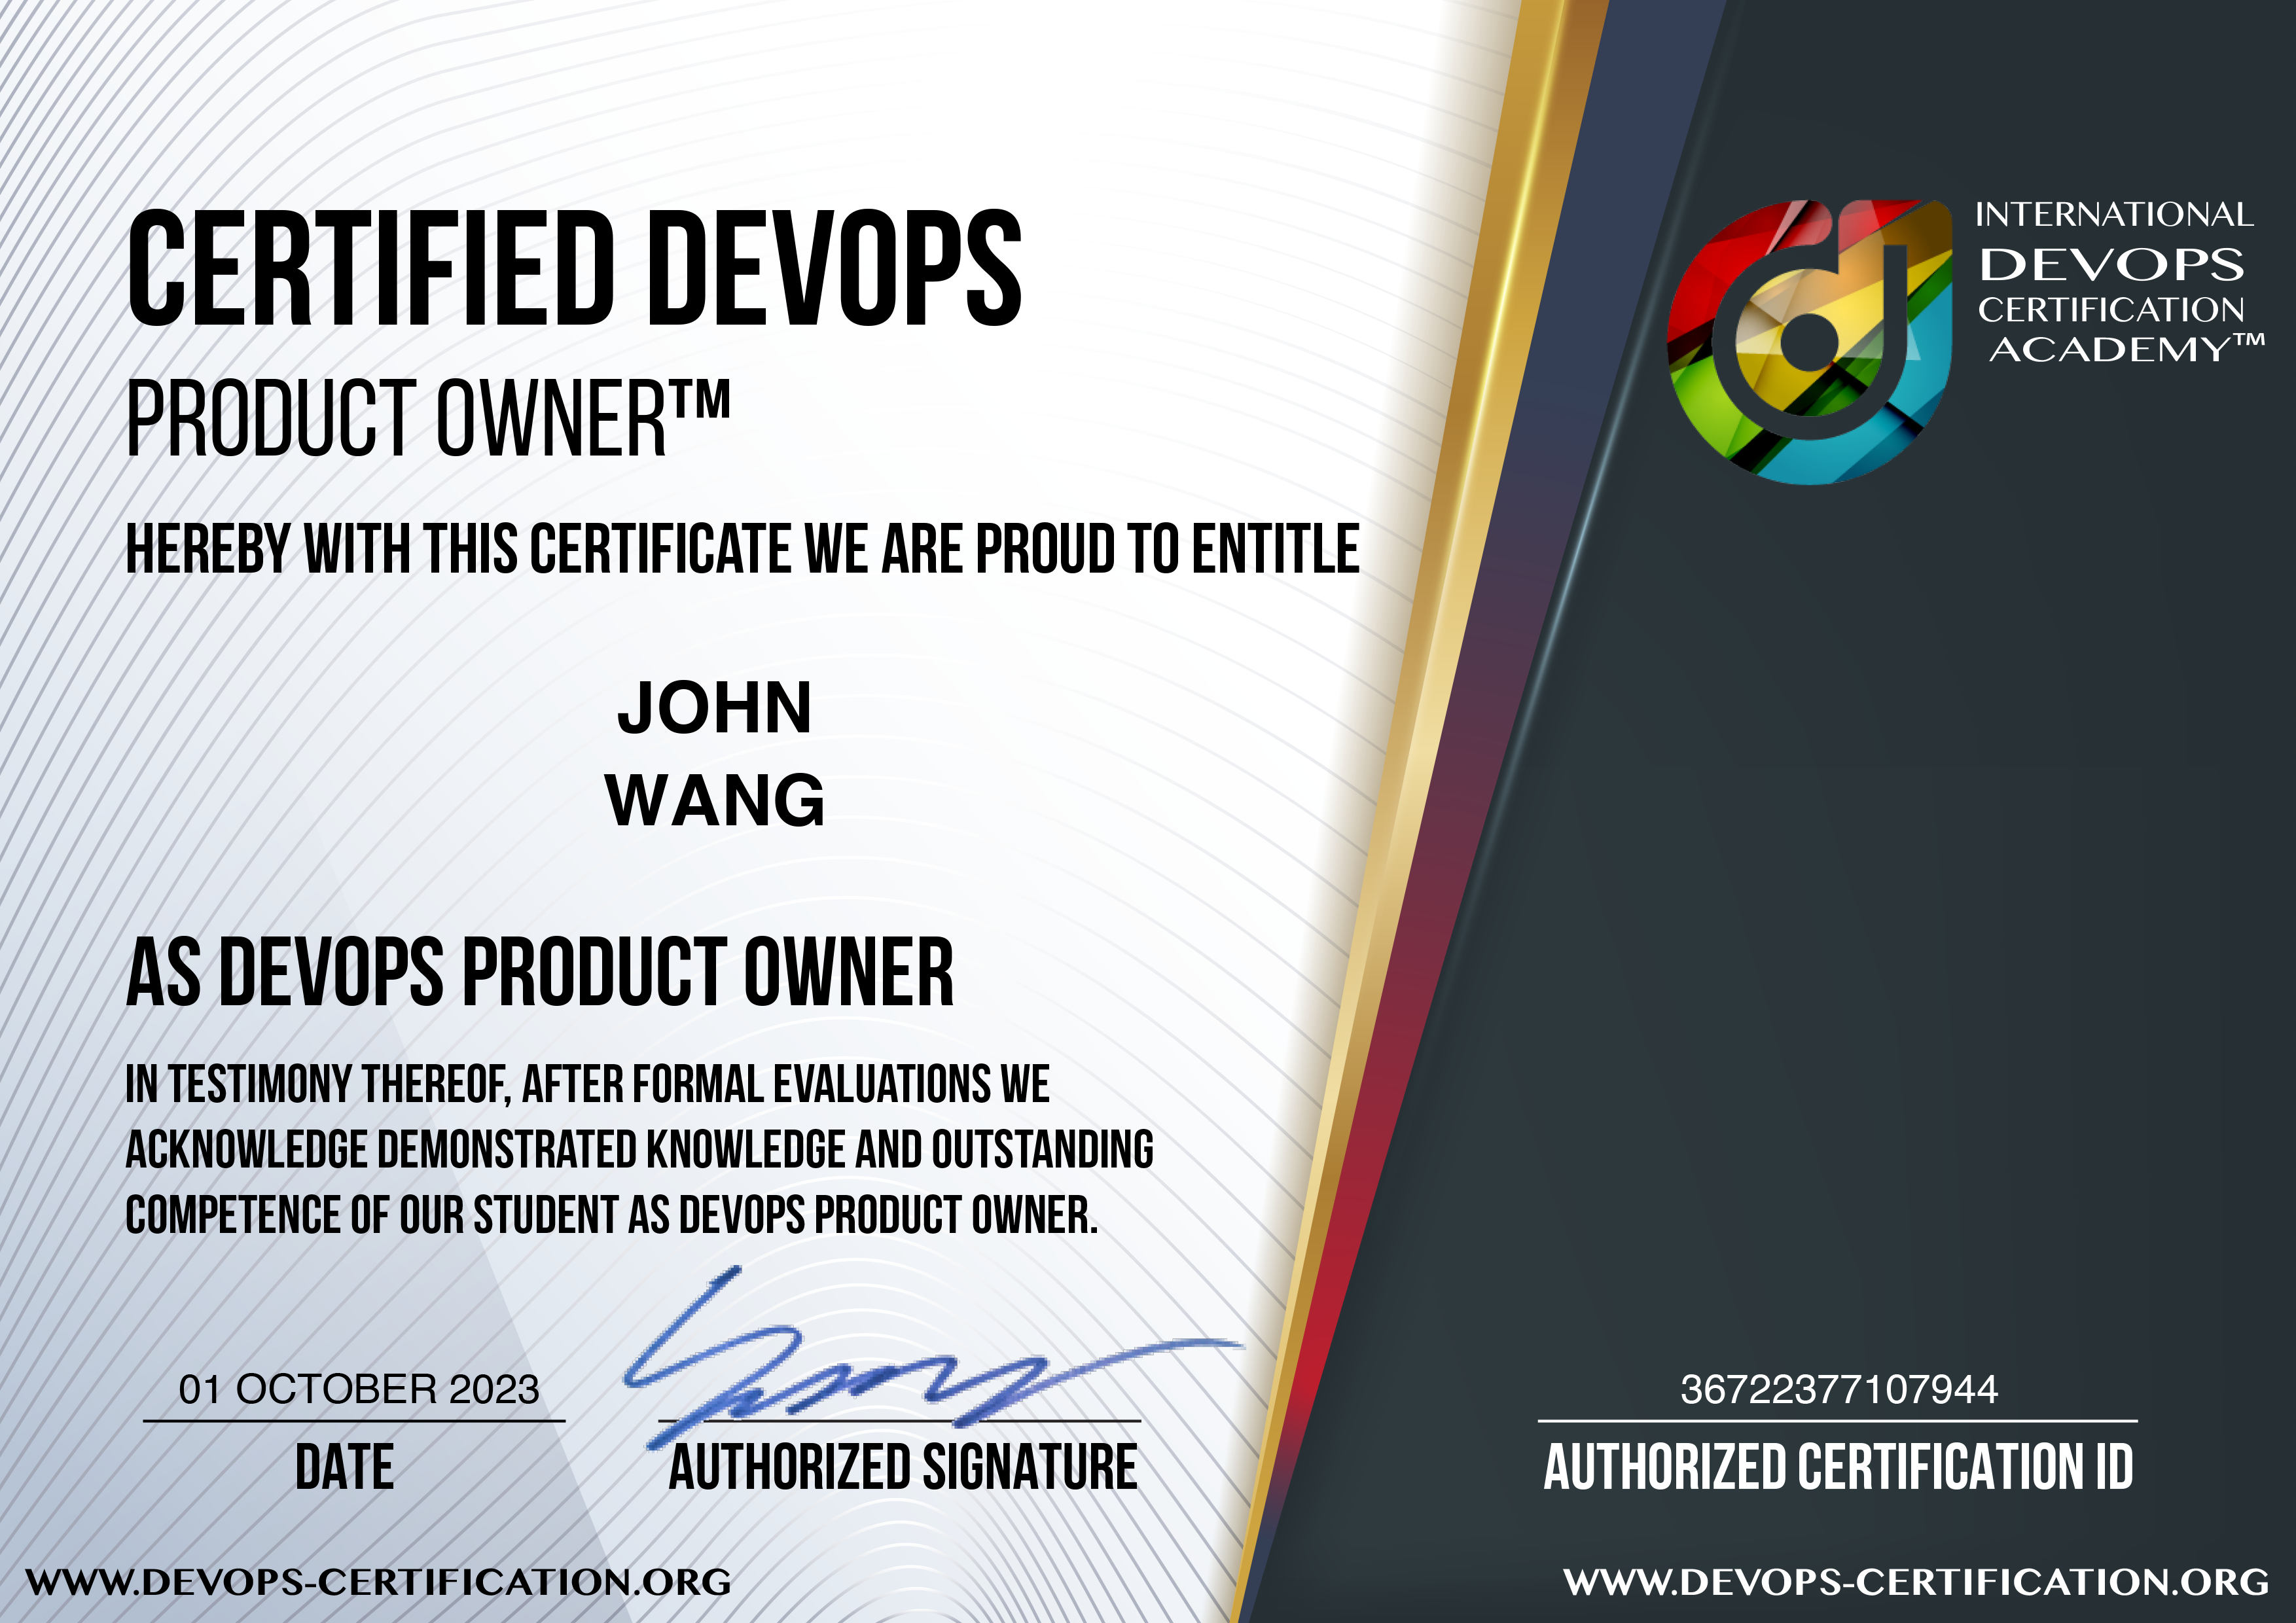 John's Certified DevOps Product Owner (DevOps-PO) from DevOps Academy